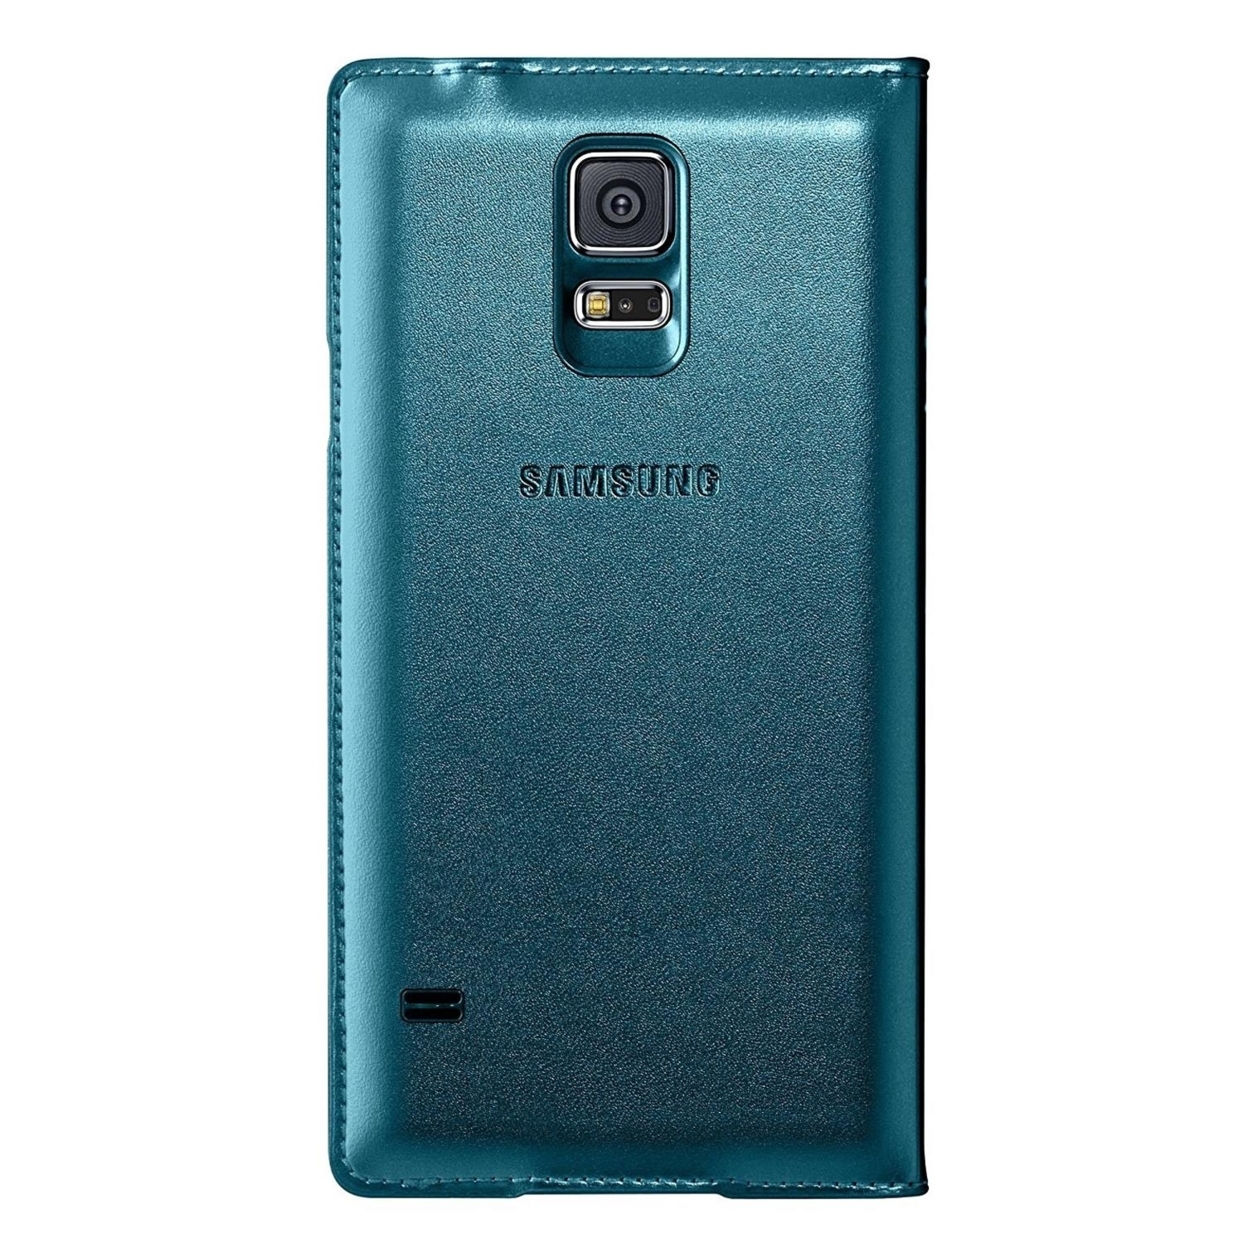 Samsung S-View Flip Cover For Galaxy S5 Green ID Chip Case Folio Front Window Sleek Stylish EF-CG900BGESTA